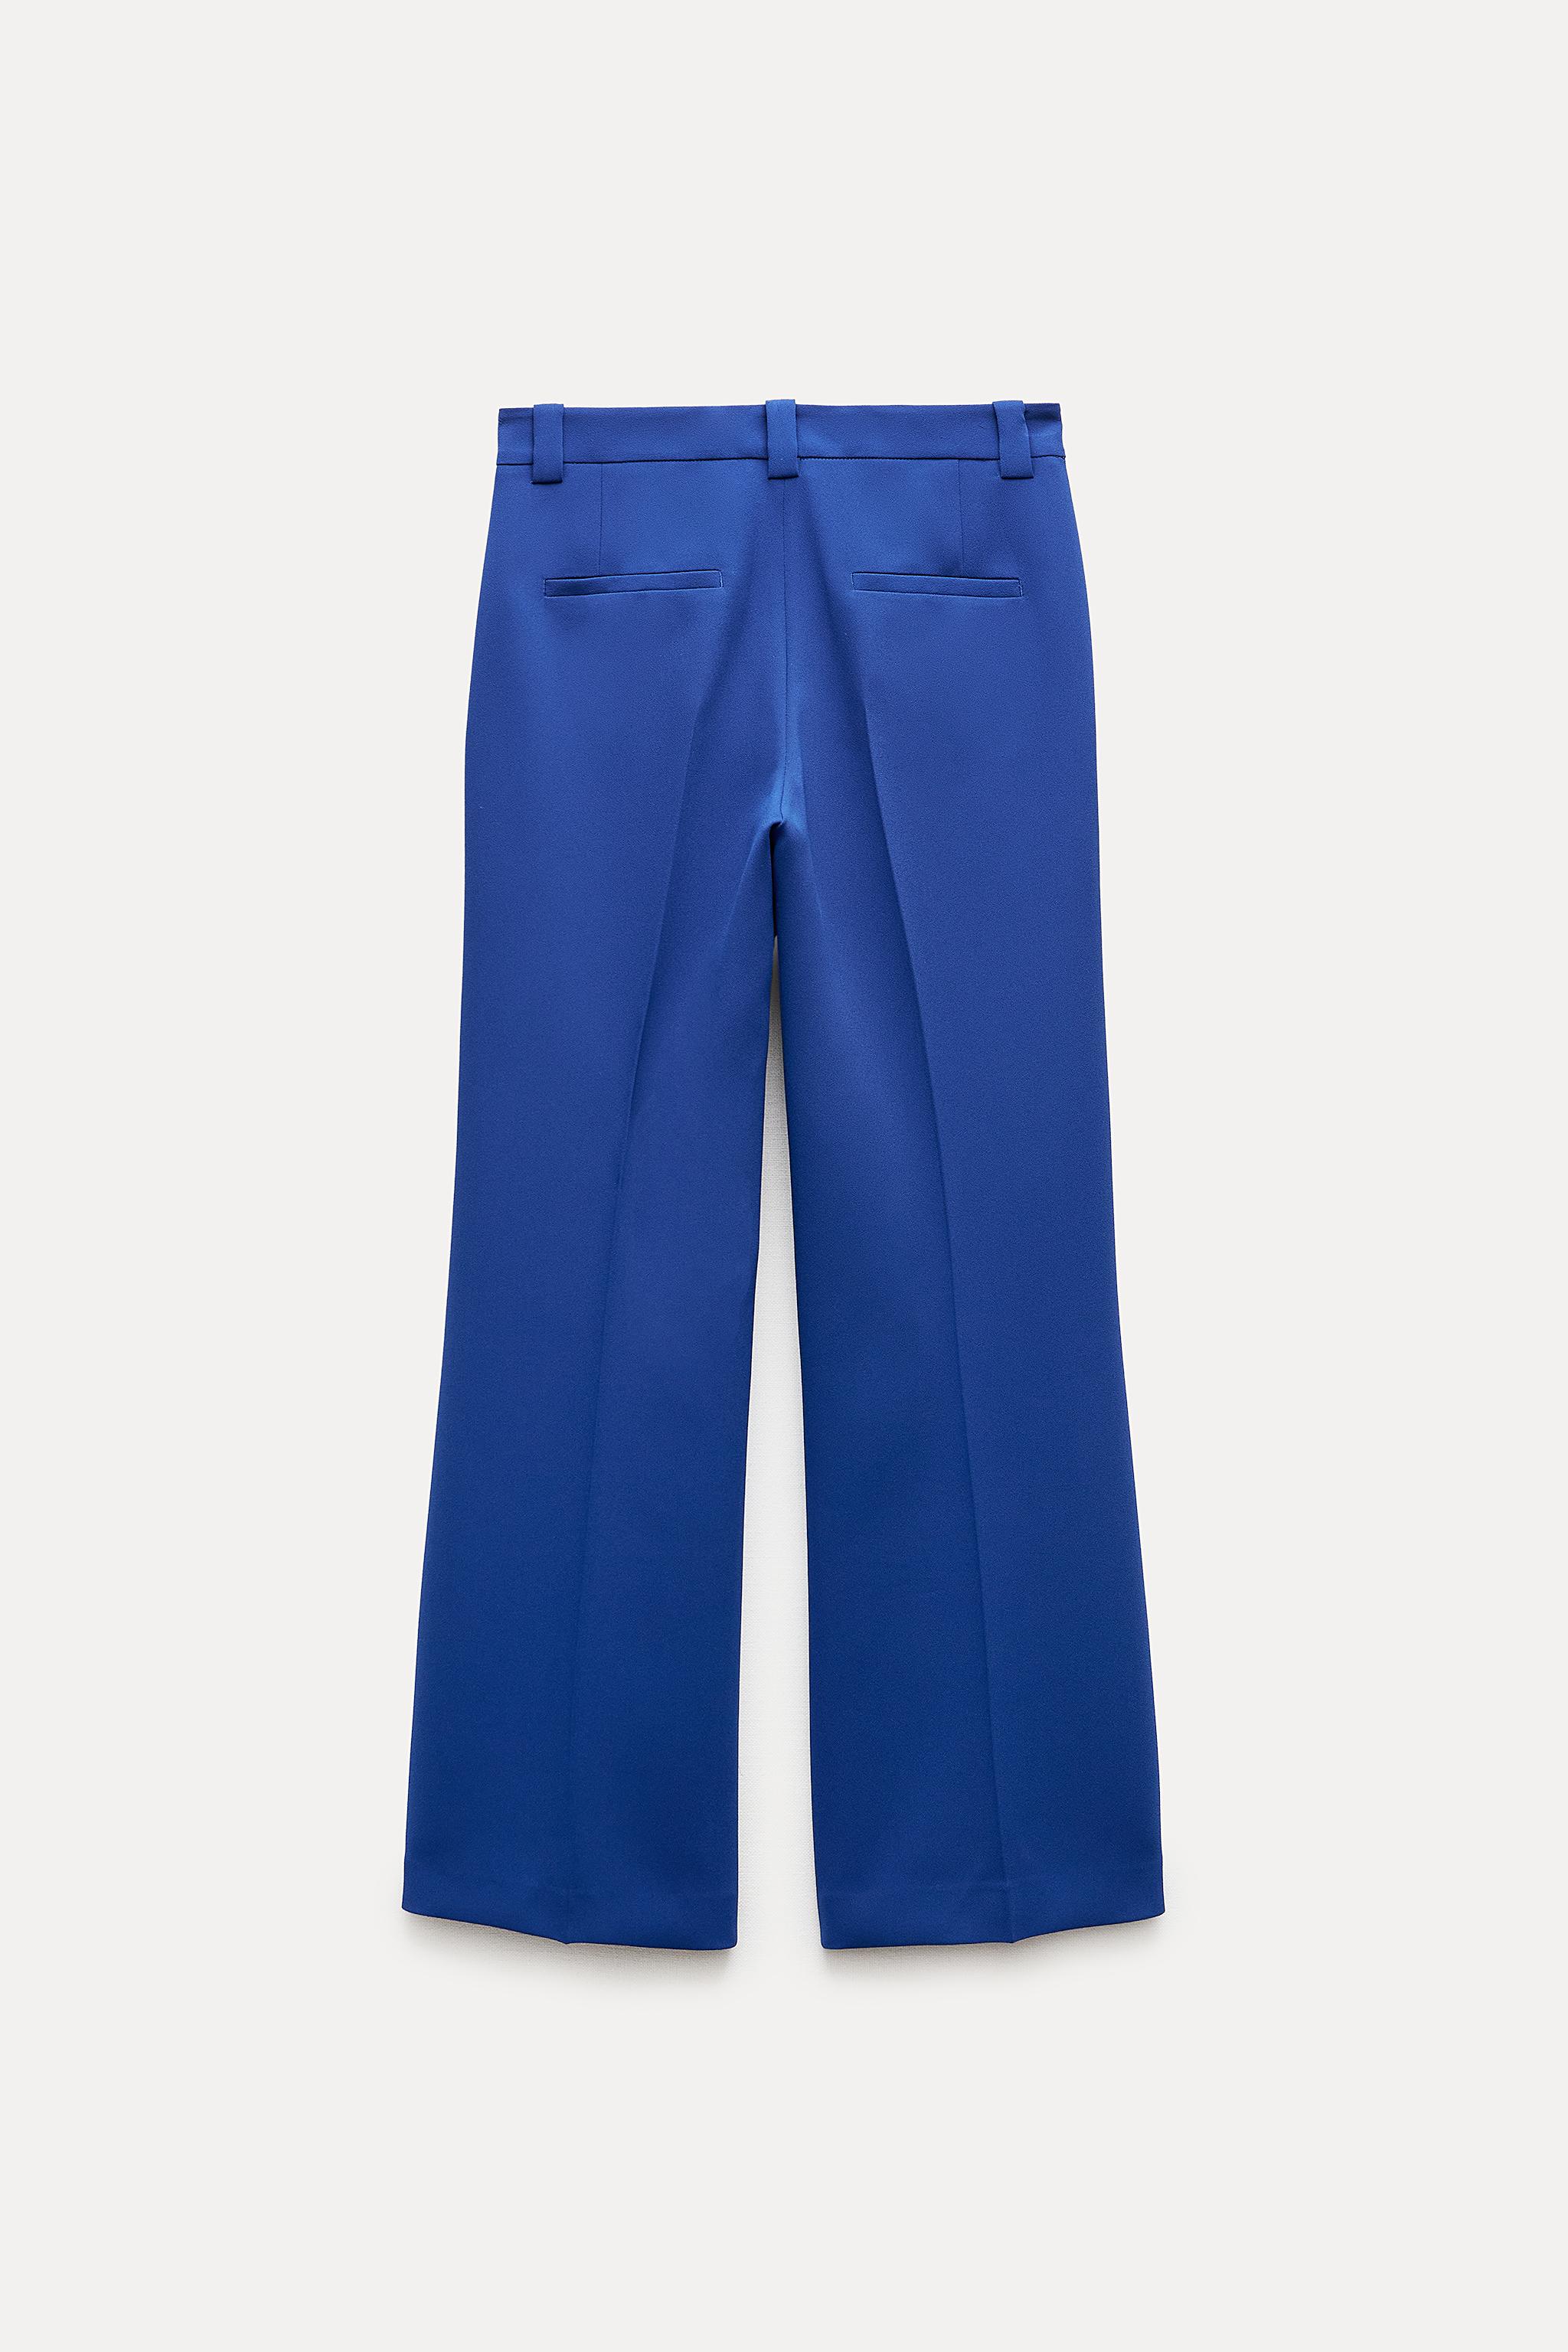 Zara Women Waist Detail Pants Trousers Ecru Bloggers Fav 2490/703 Size S